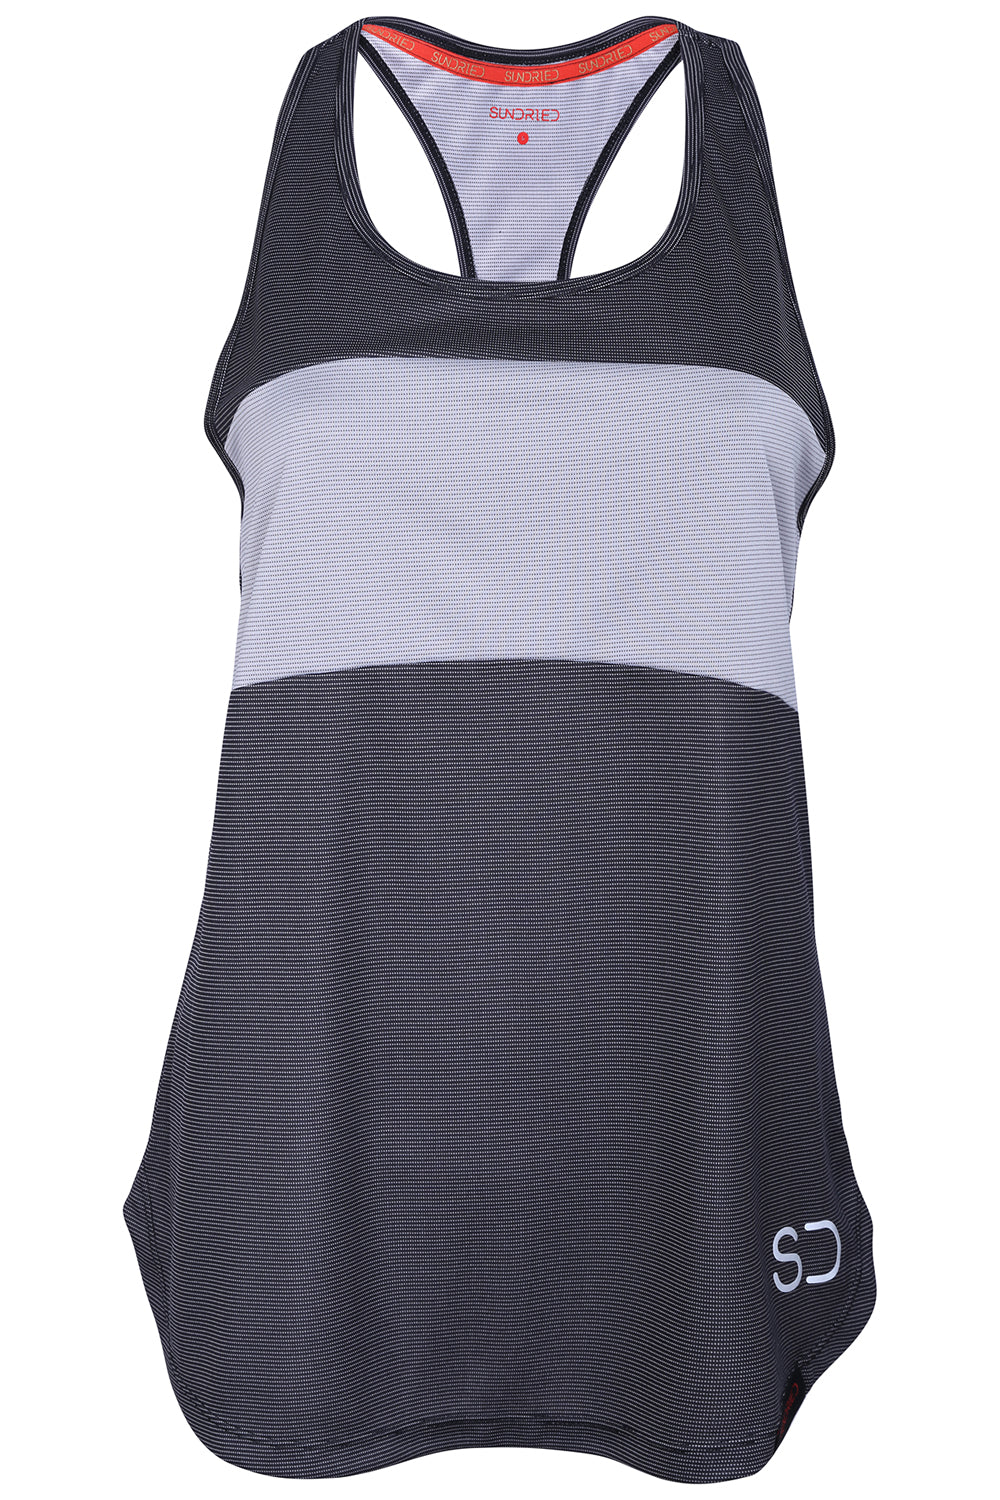 Sundried Piz Fora Women's Training Vest Vest S Dark Grey SD0054 S Black Activewear